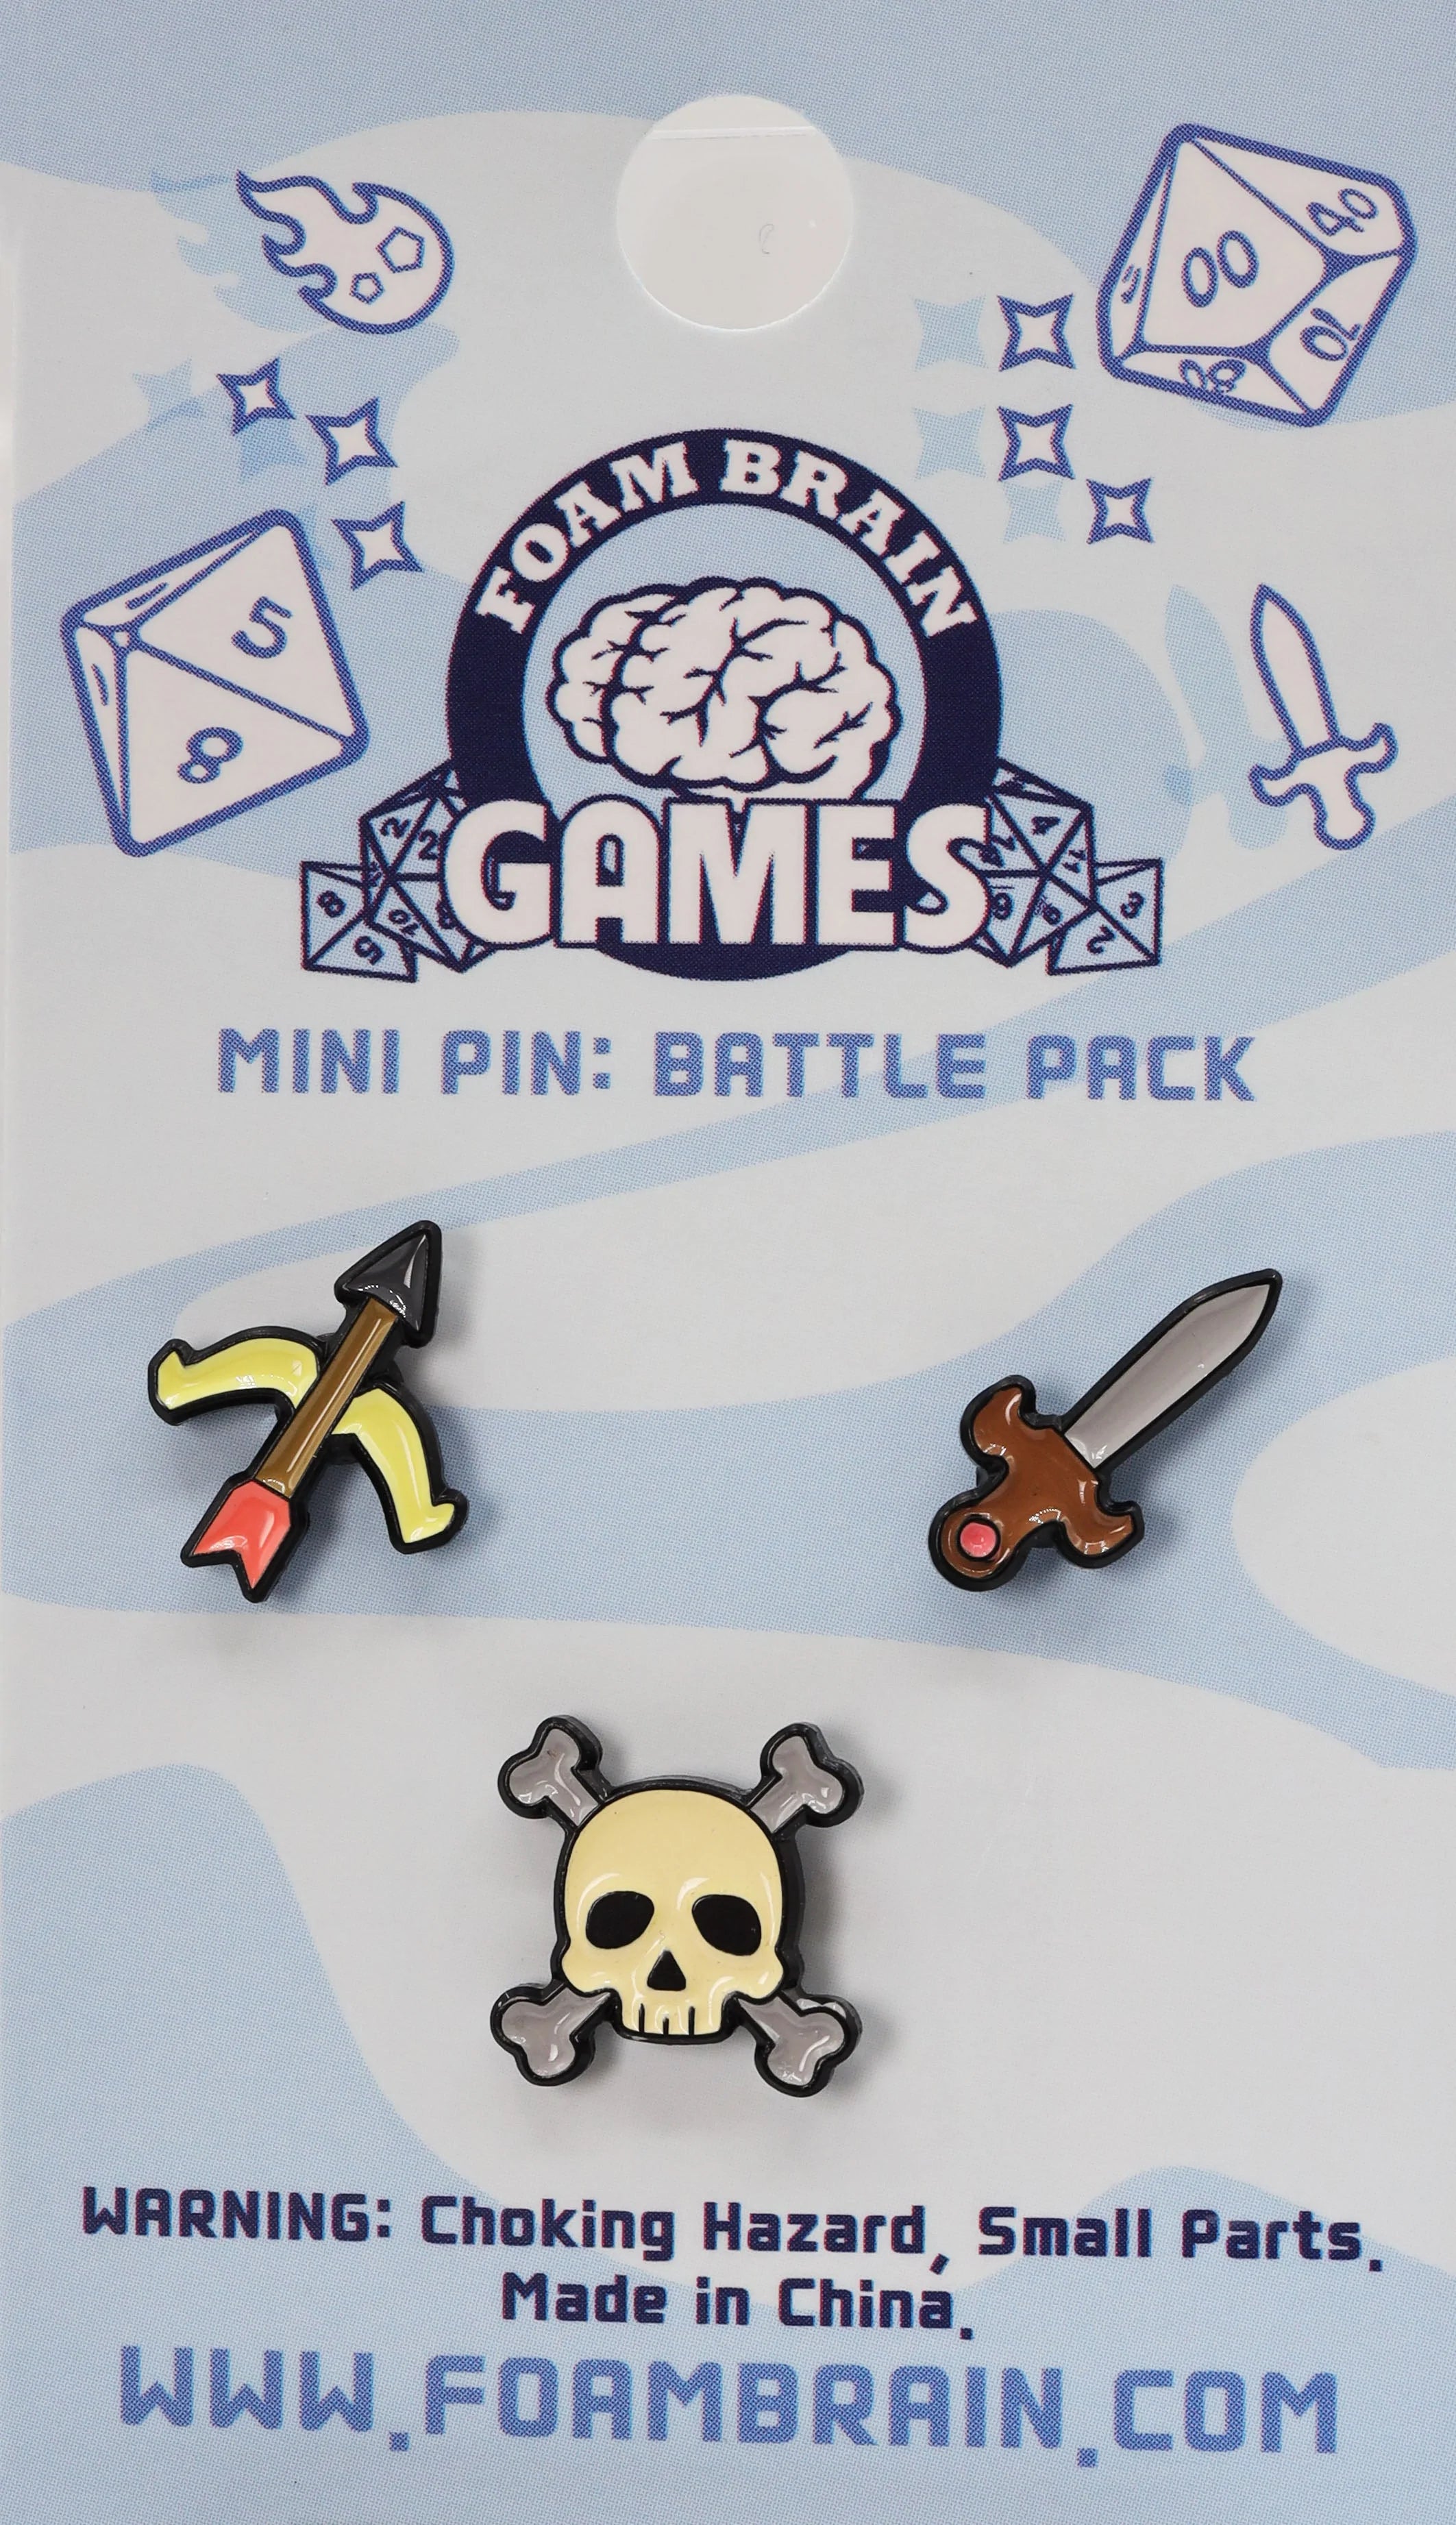 Mini Pins: Battle Pack Pins Foam Brain Games    | Red Claw Gaming